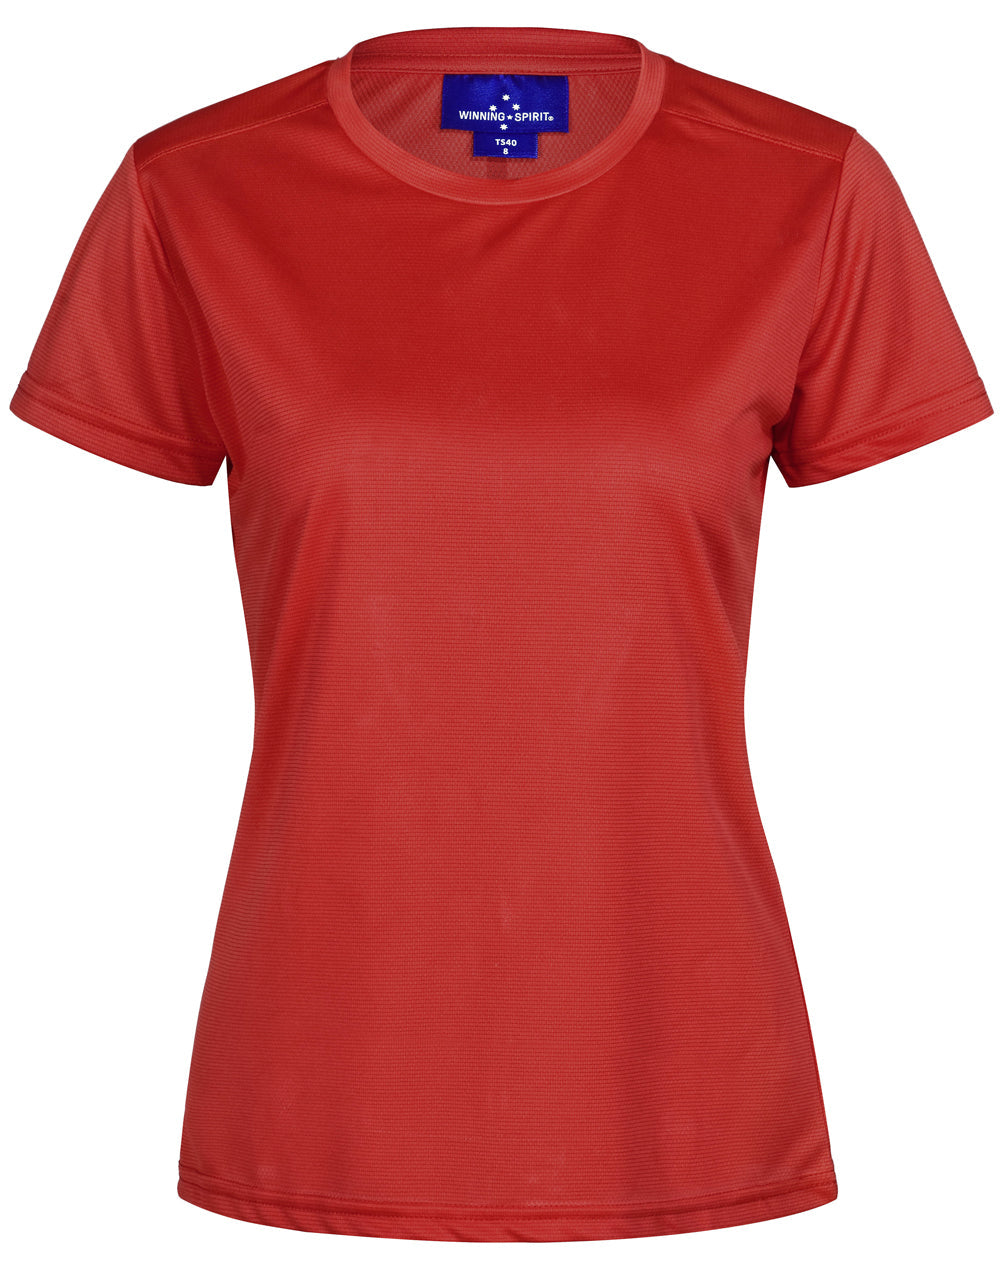 Ladies Rapid Cool TM  Ultra Light Tee Shirt TS40 Casual Wear Winning Spirit Red 6 